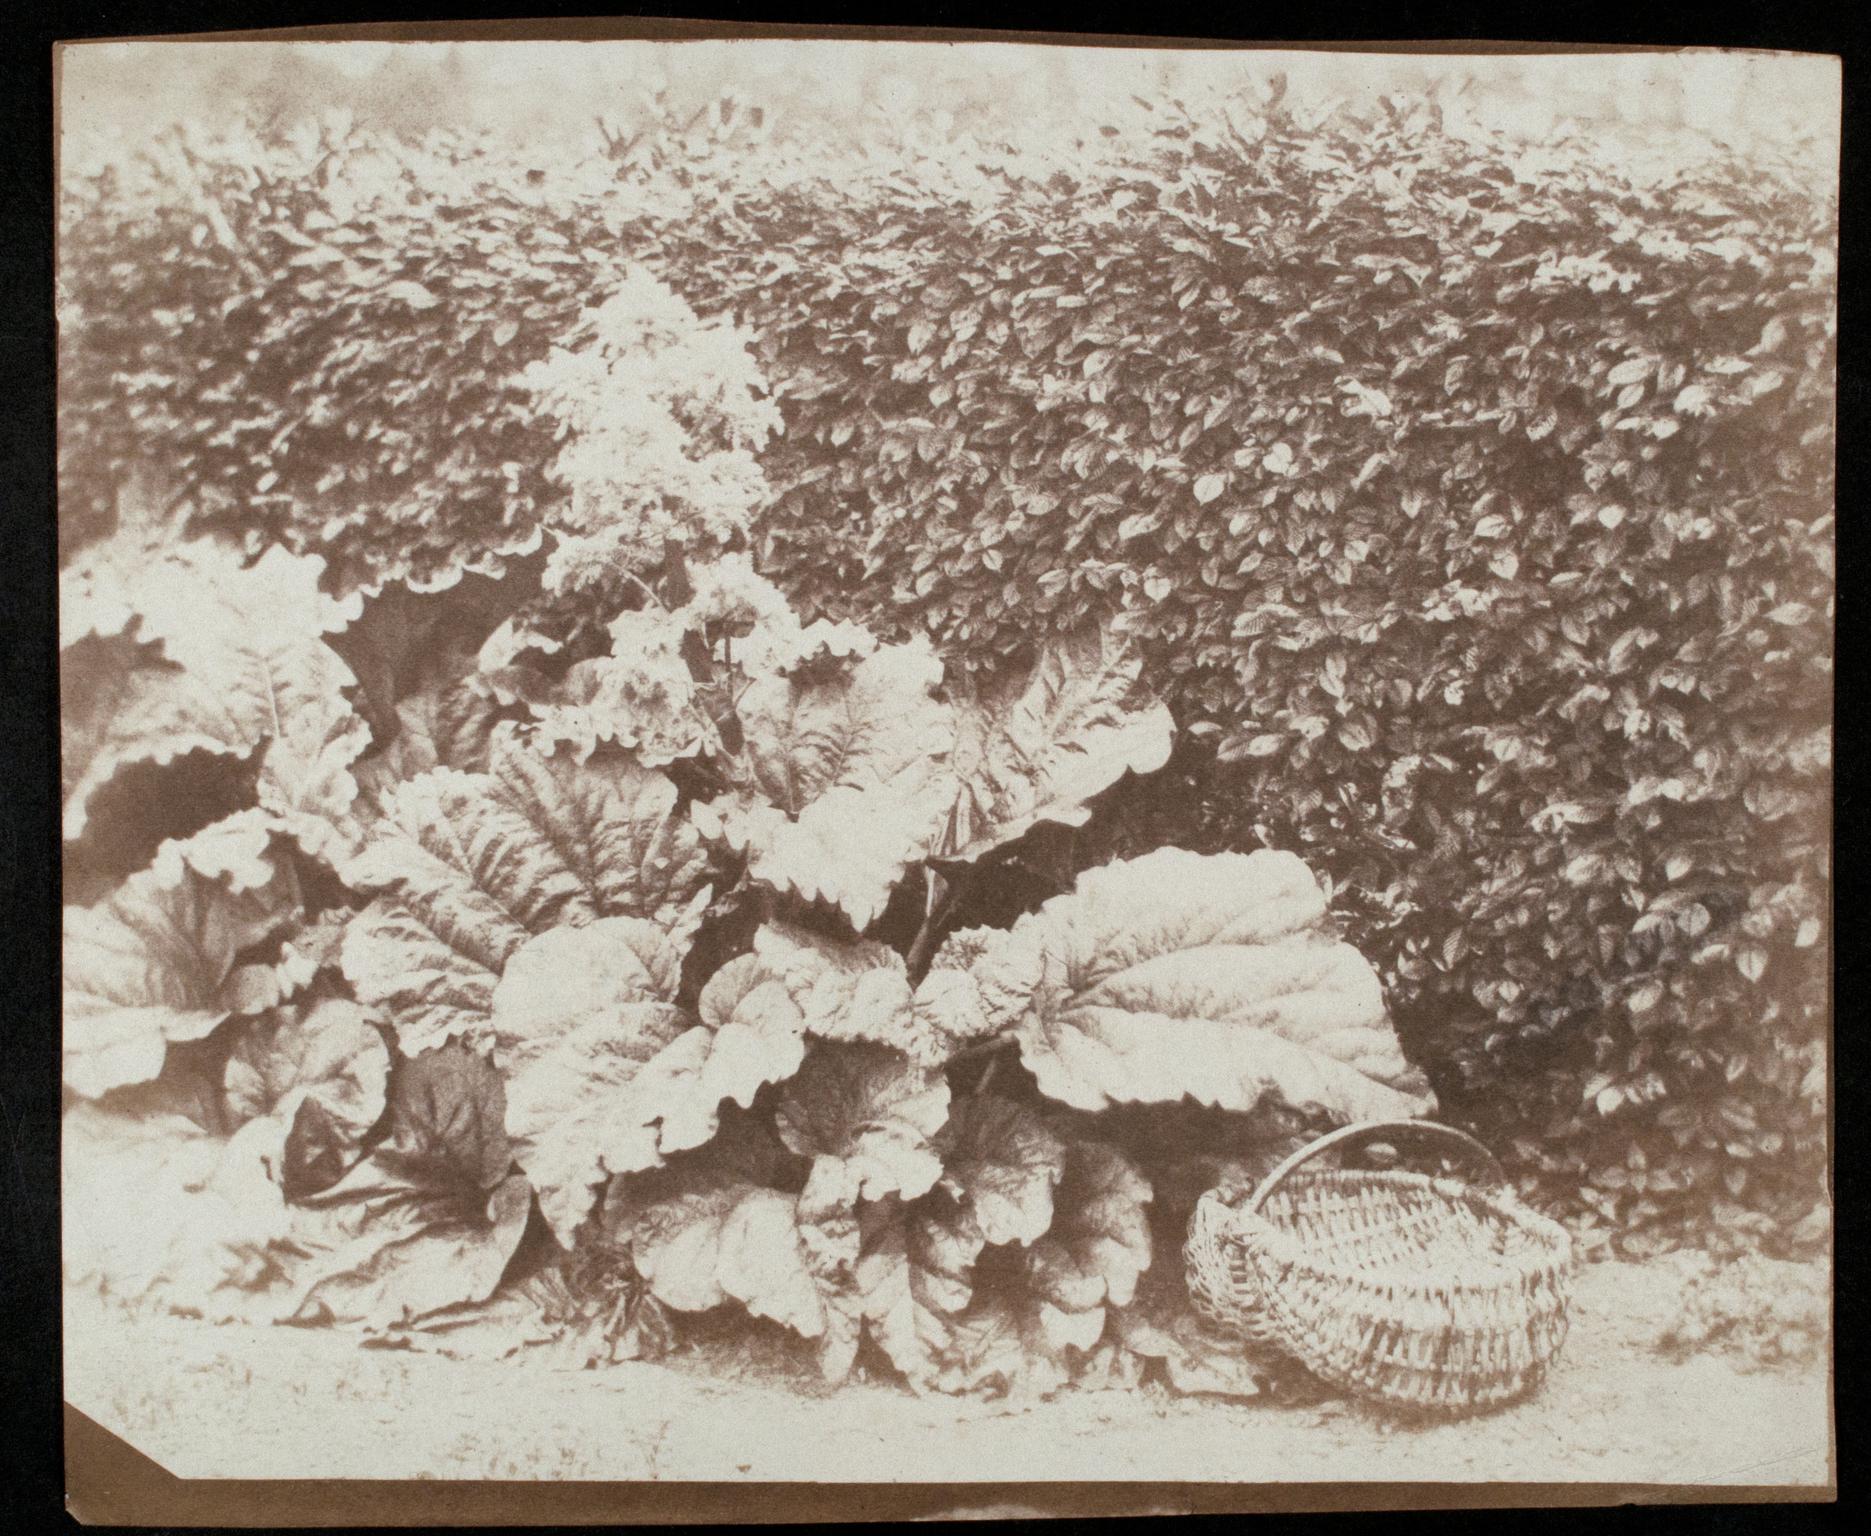 Rhubarb, photograph